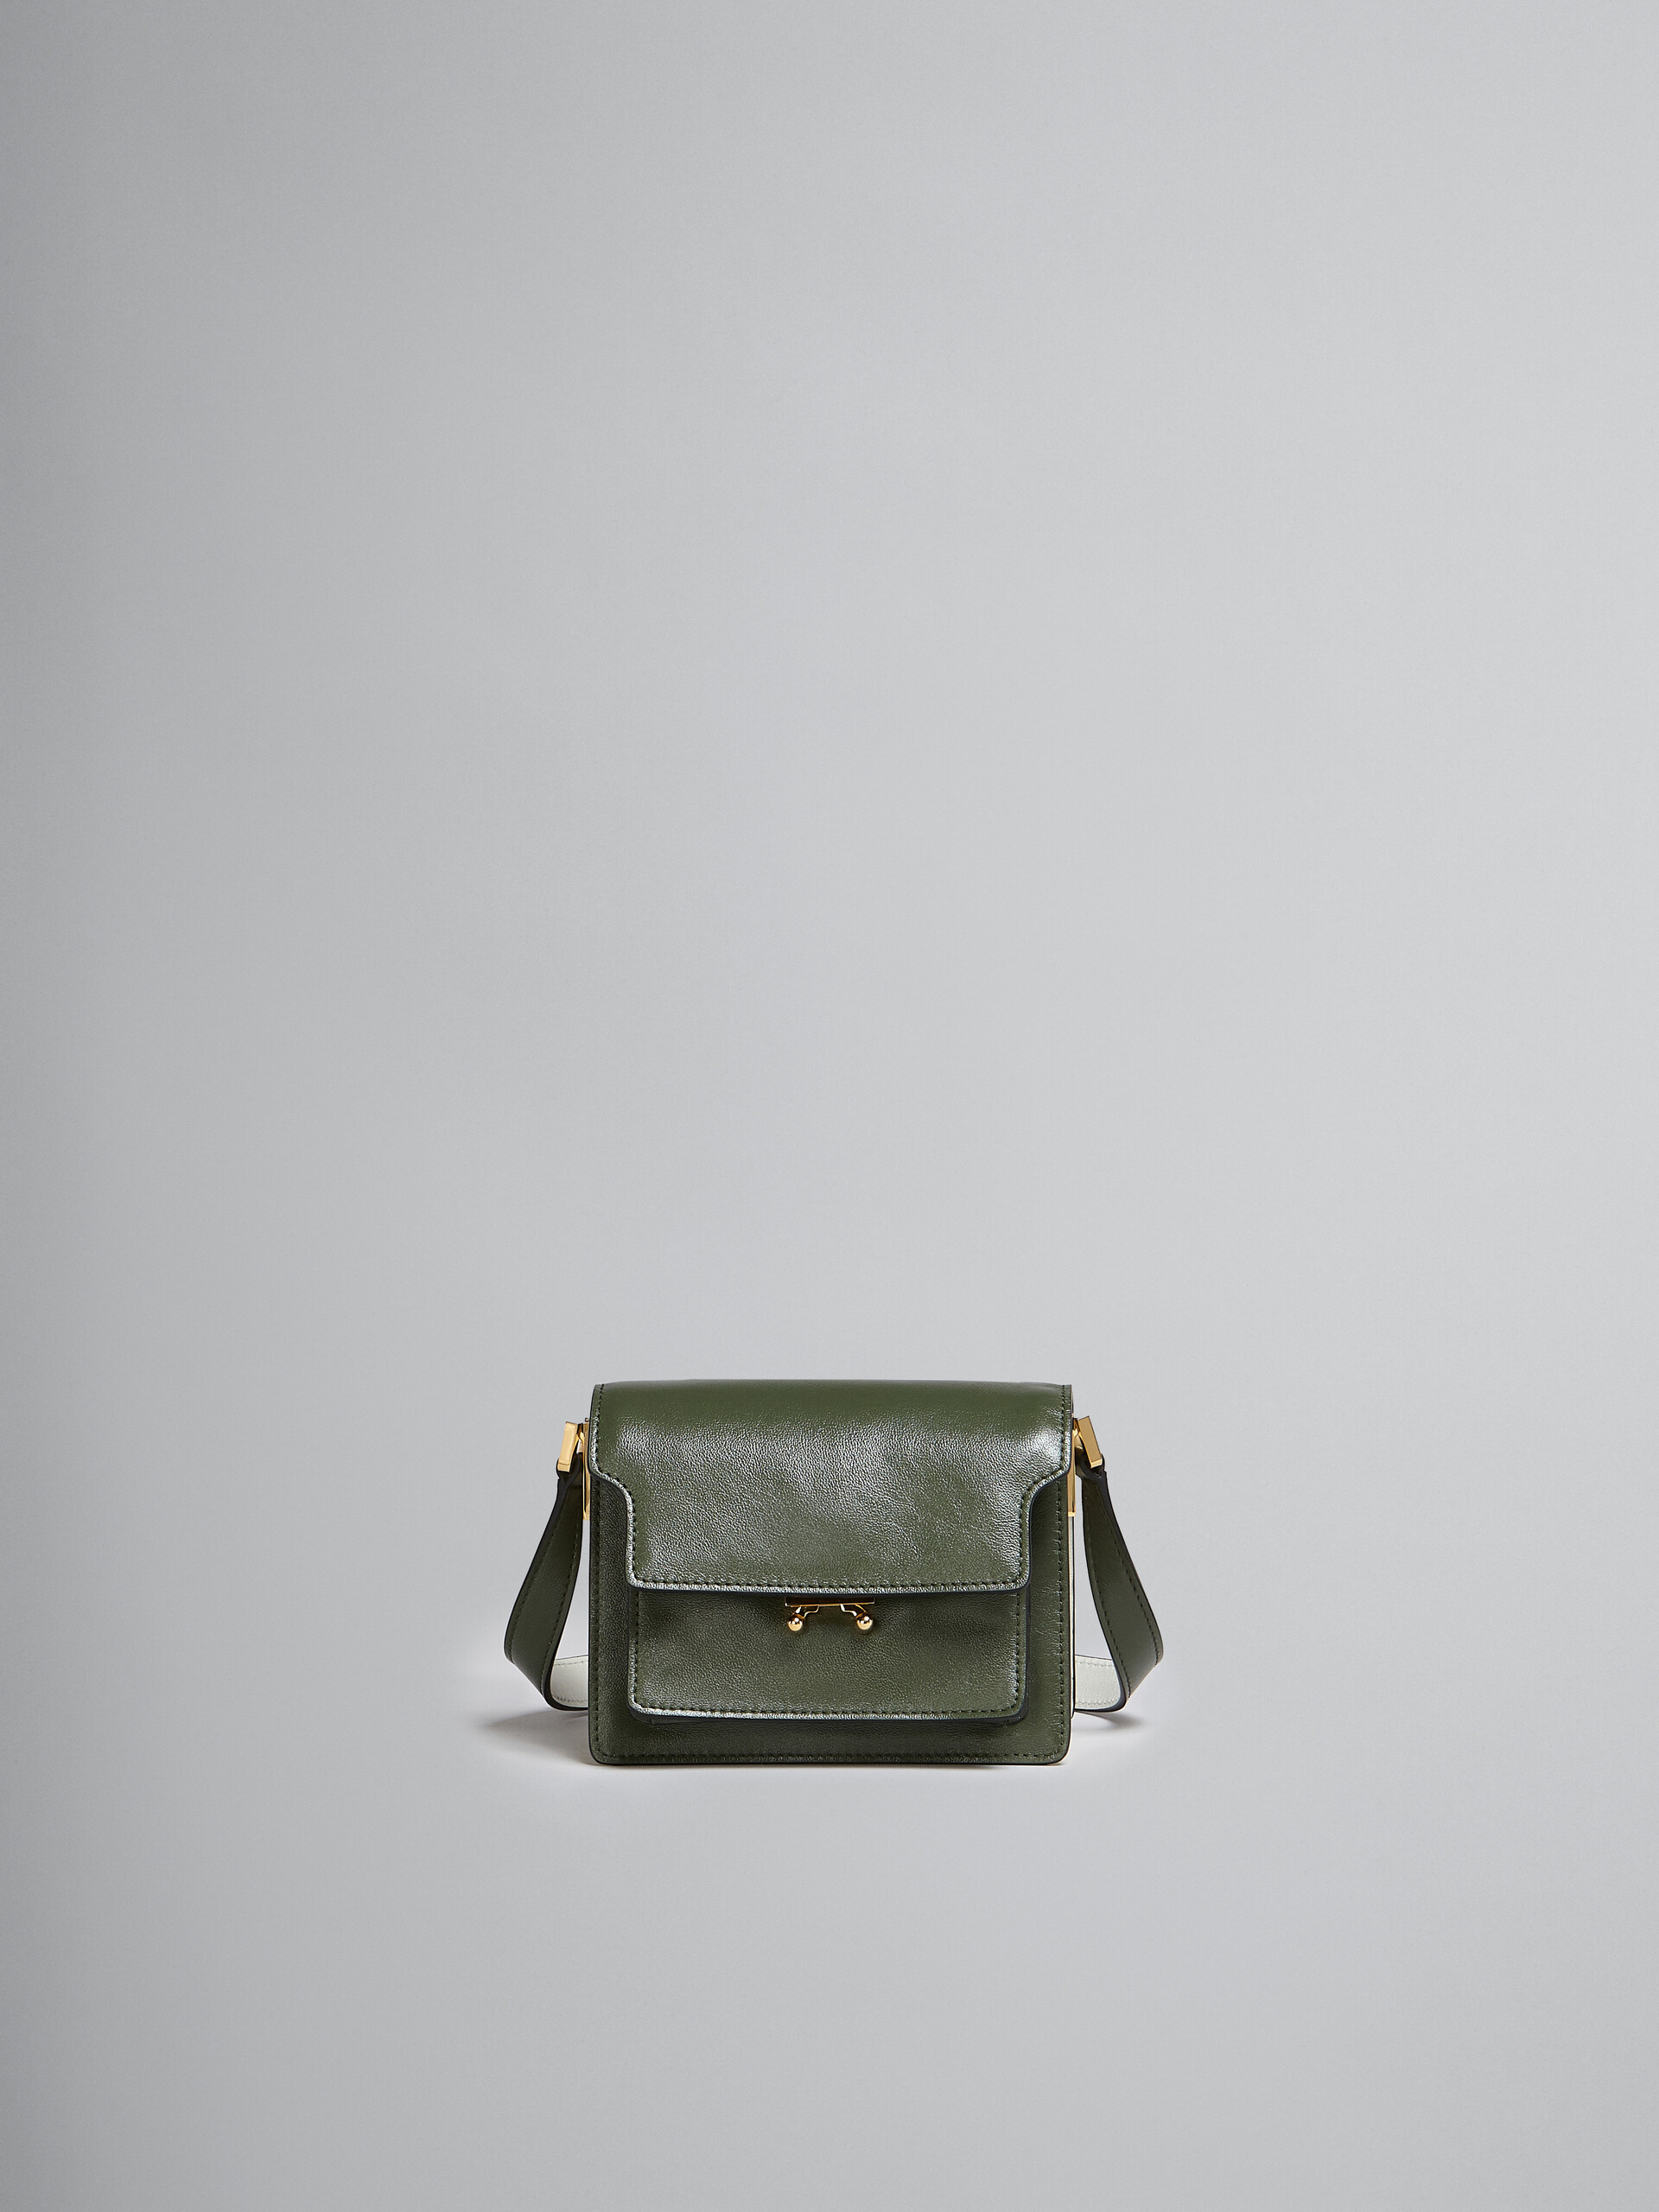 Marni Trunk Patent Soft Mini Bag in Sea Green